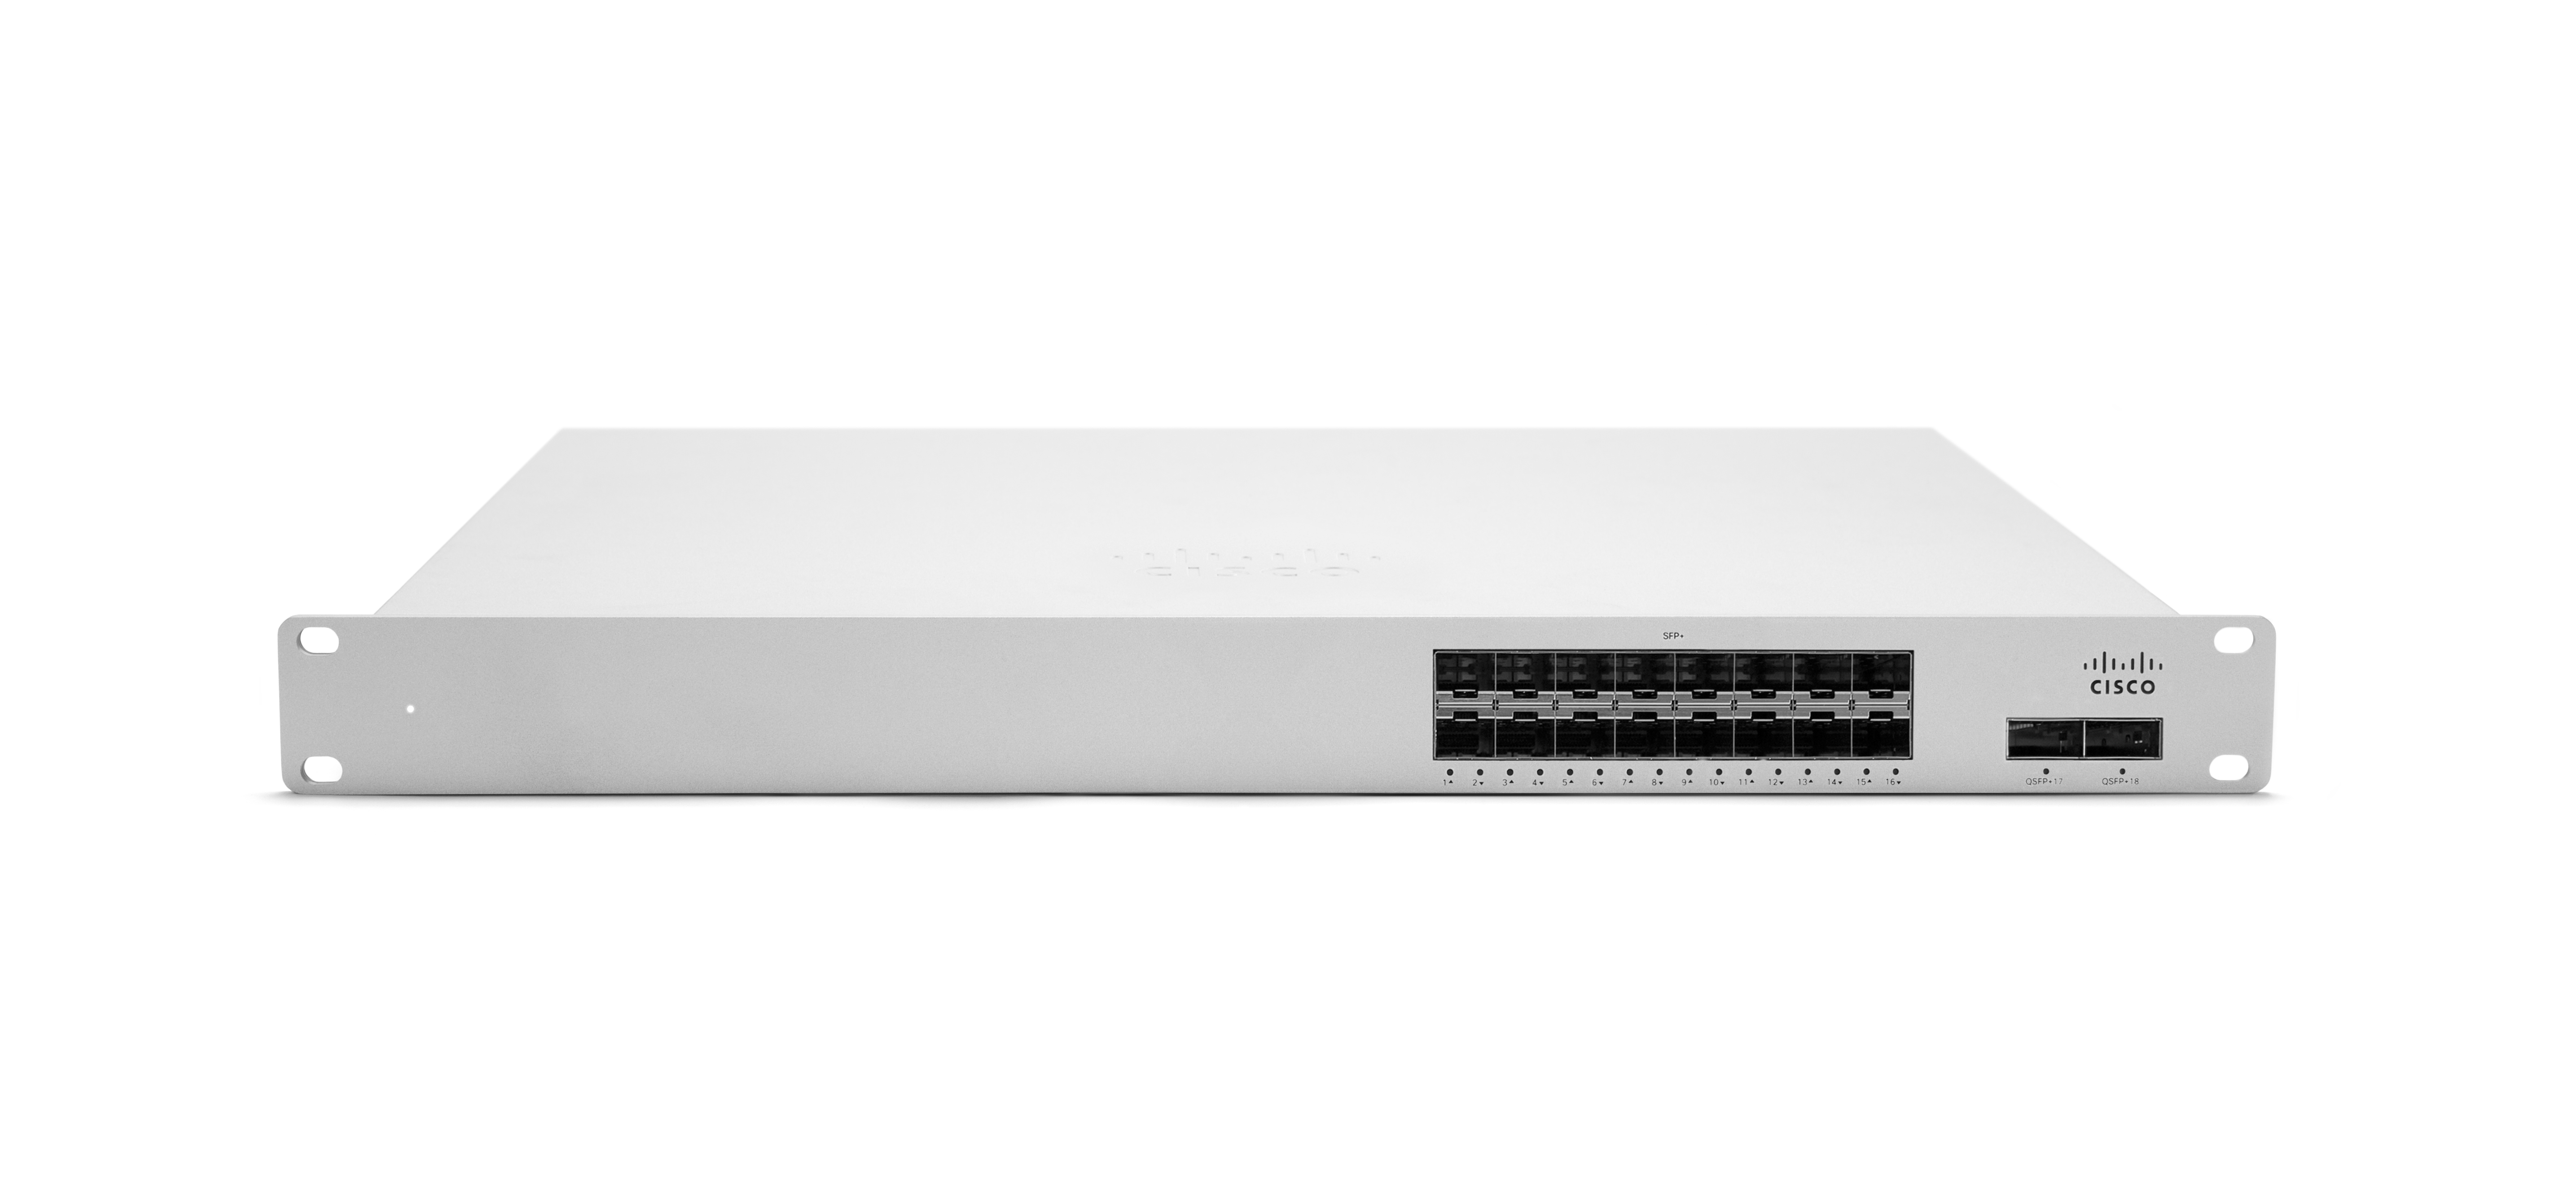 Cisco Meraki MS42P-HW 48 Port PoE Gigabit Cloud Switch - SAME DAY SHIPPING